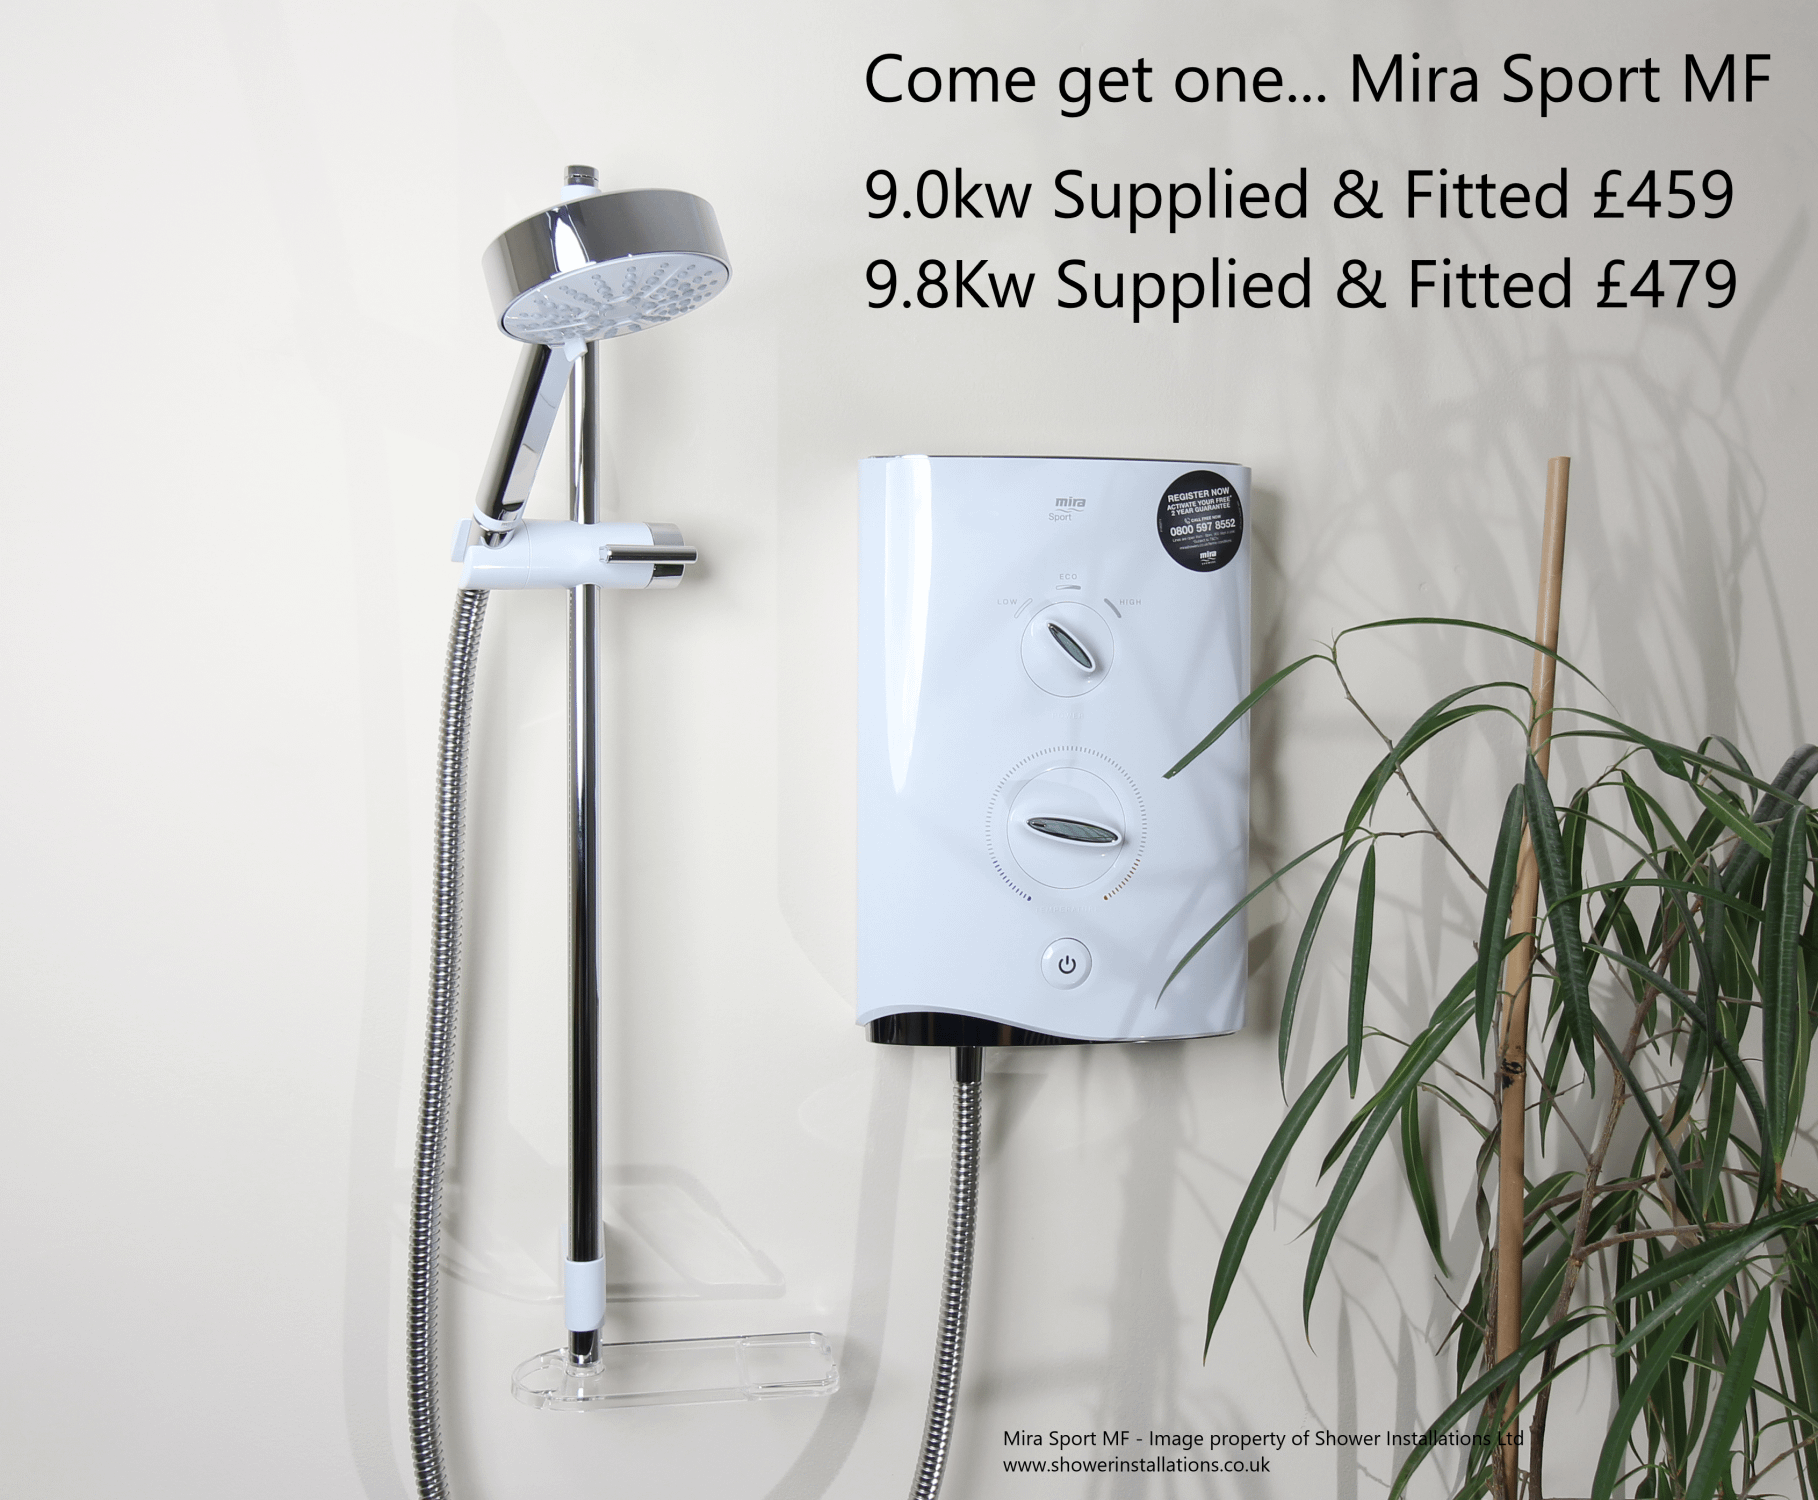 #Mira Sport Supply & Fit